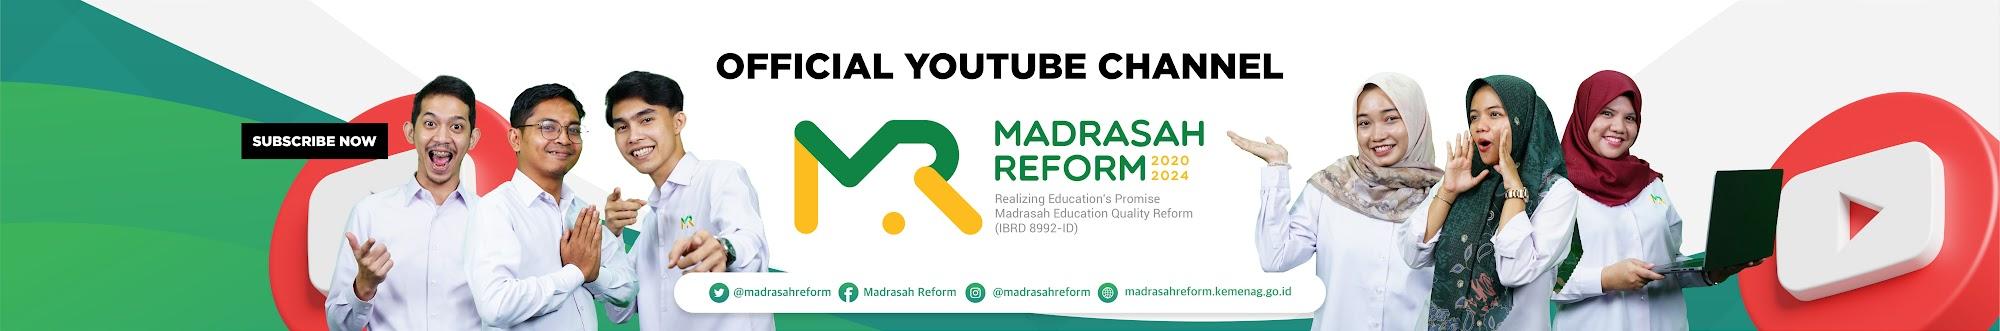 Madrasah Reform